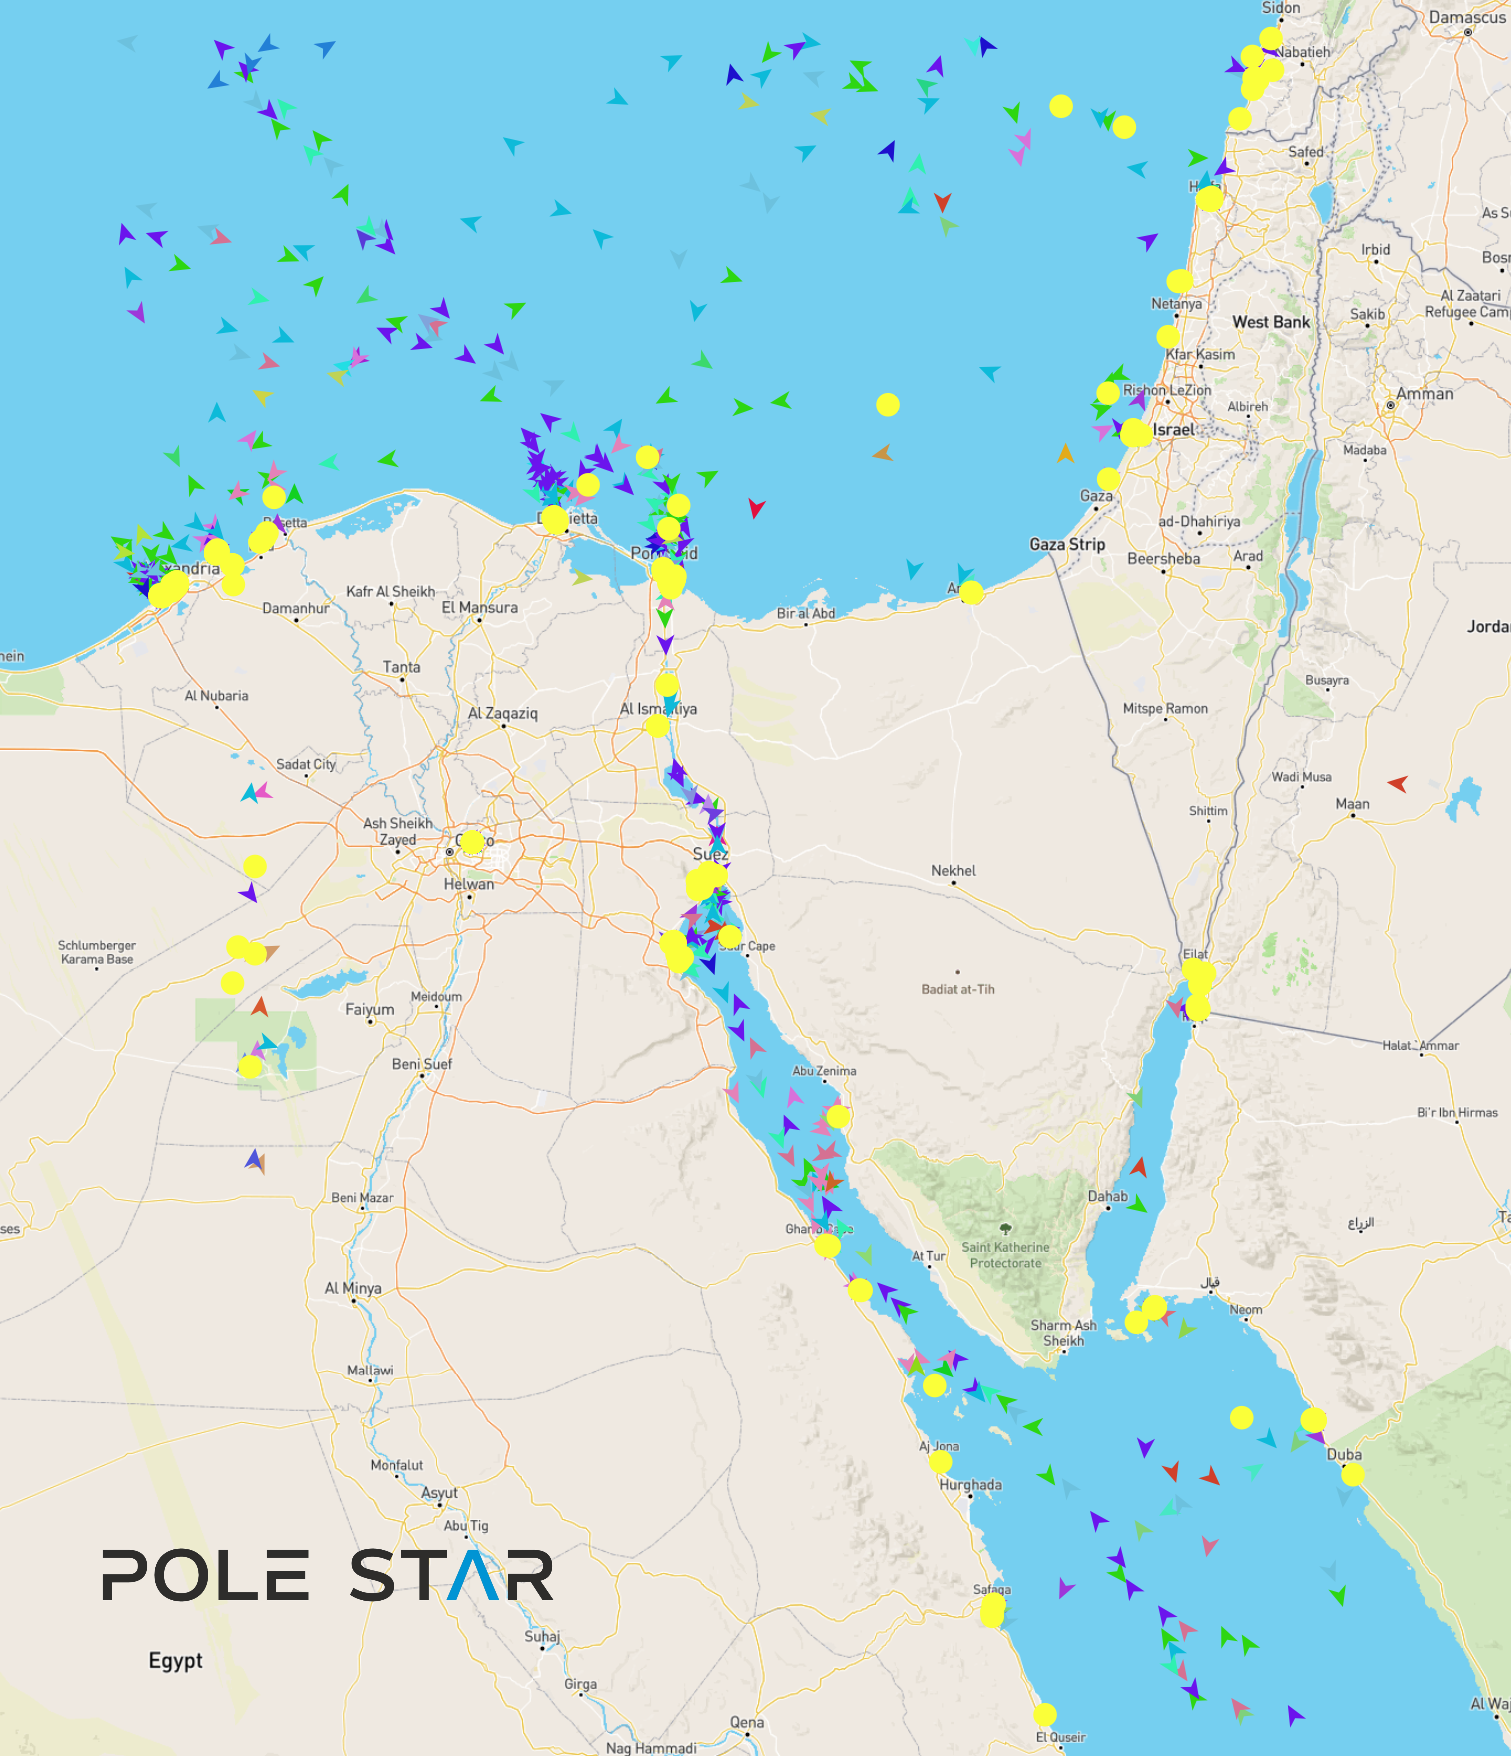 ship movement through the Suez Canal following the Red Sea Crisis